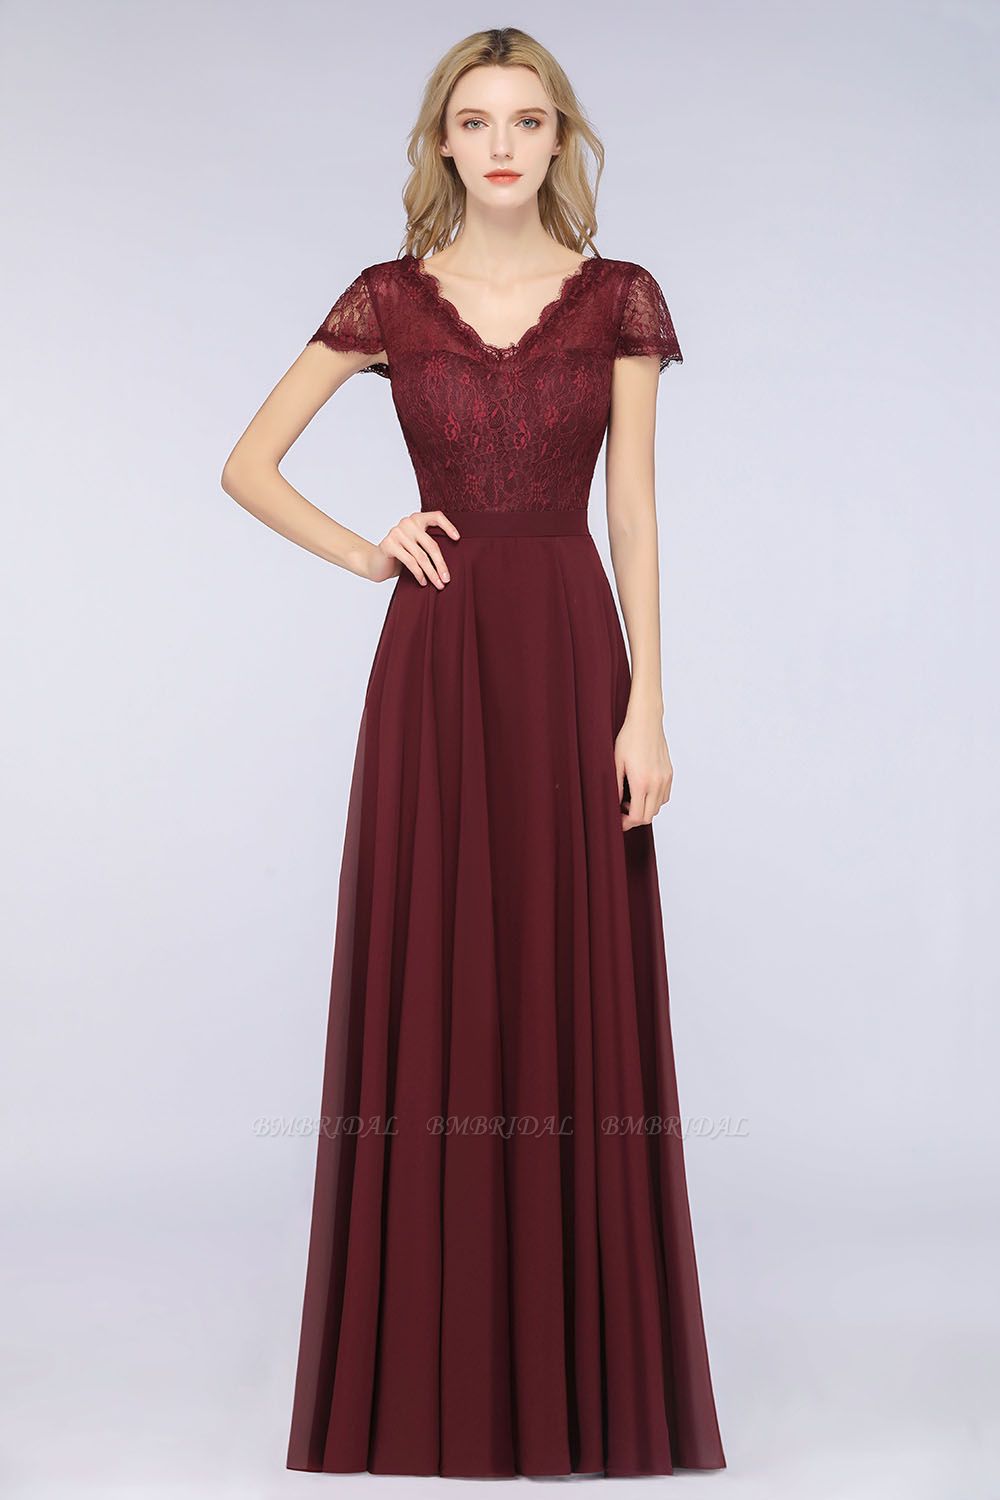 BMbridal Elegant Lace V-Neck Burgundy Bridesmaid Dress with Cap Sleeves